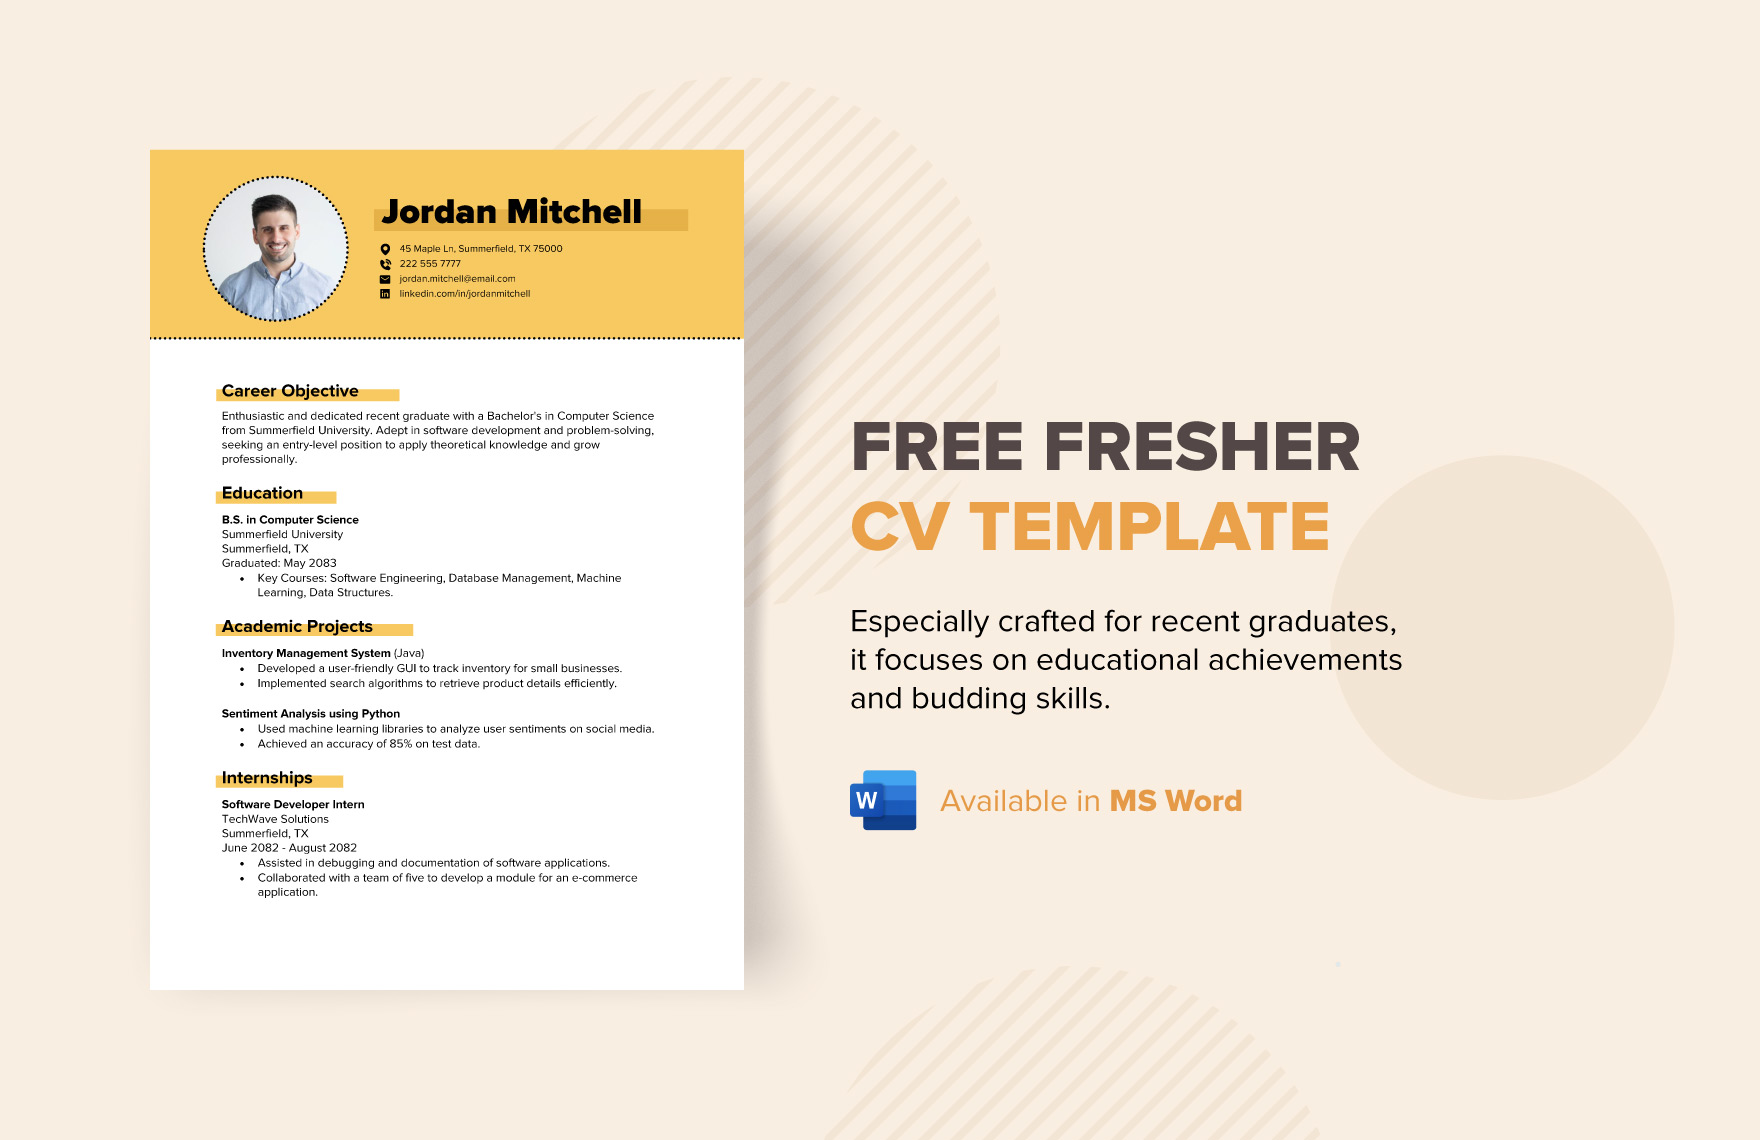 Free Fresher CV Template